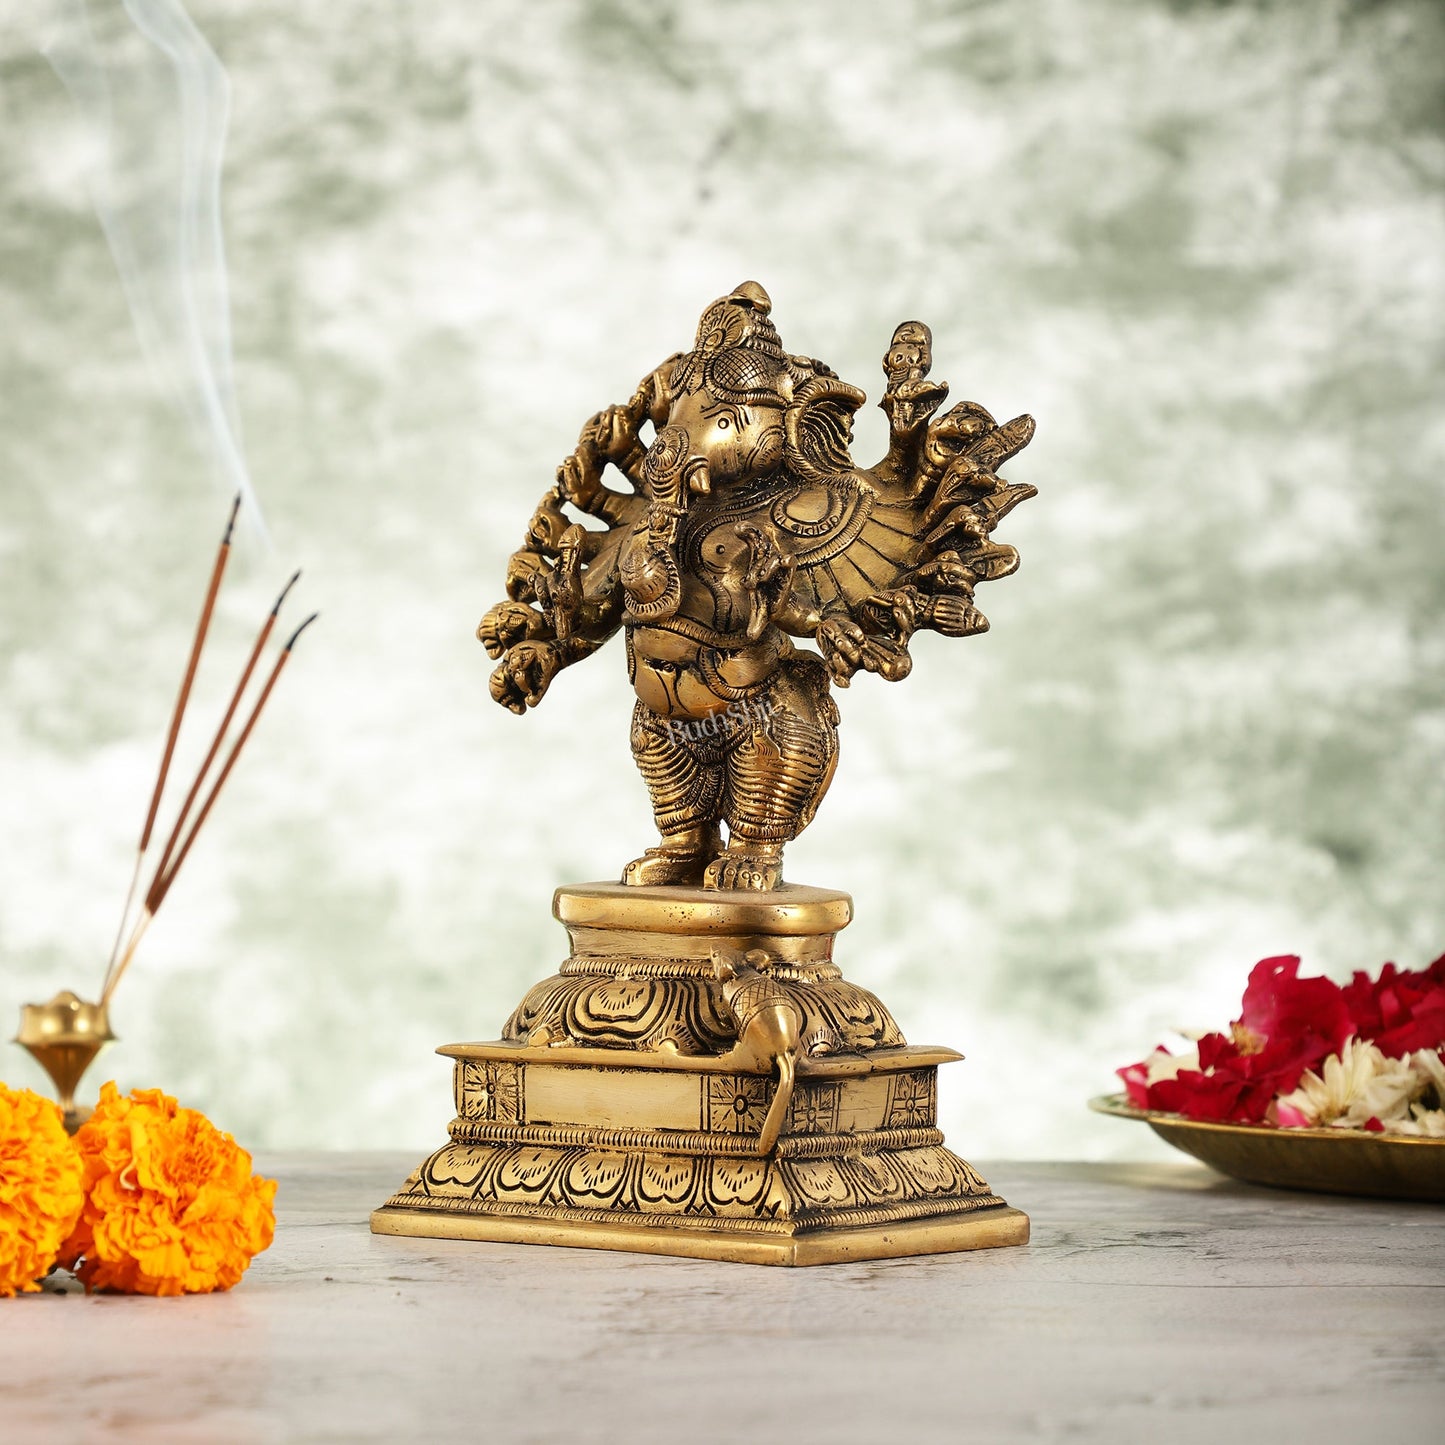 Superfine Brass Standing Lord Ganesha Idol with 16 Arms - 8.5 Inch - Budhshiv.com